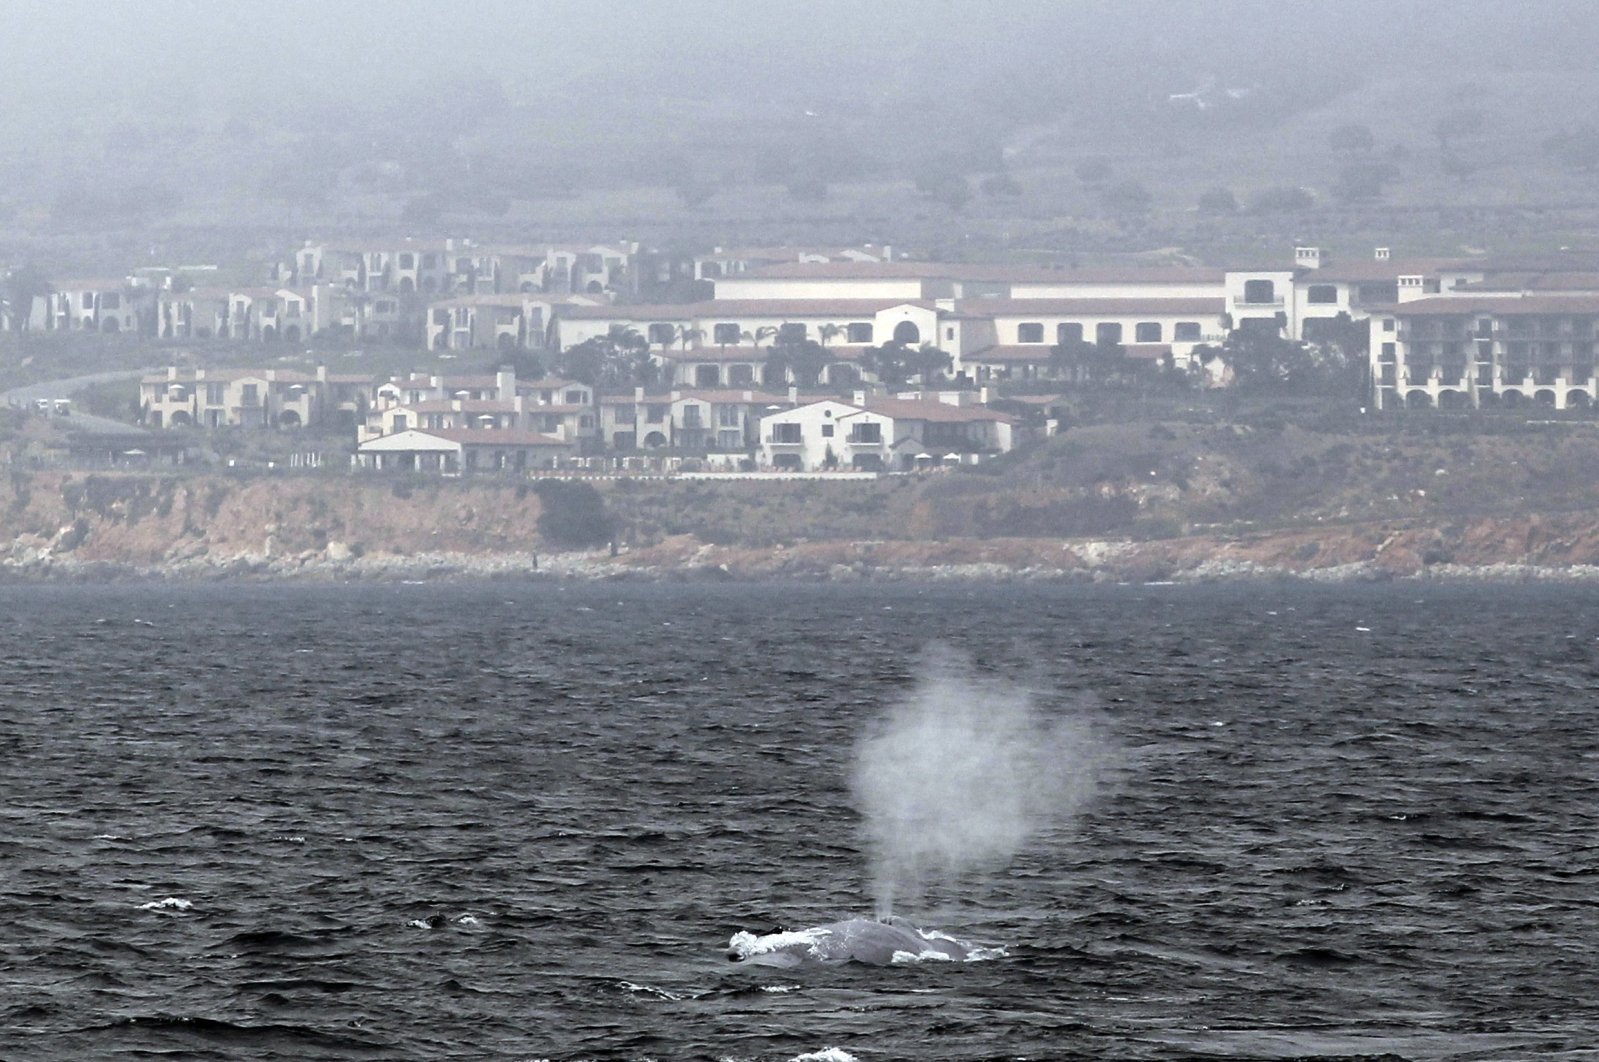 Paus biru menelan 10 juta mikroplastik setiap hari: Studi